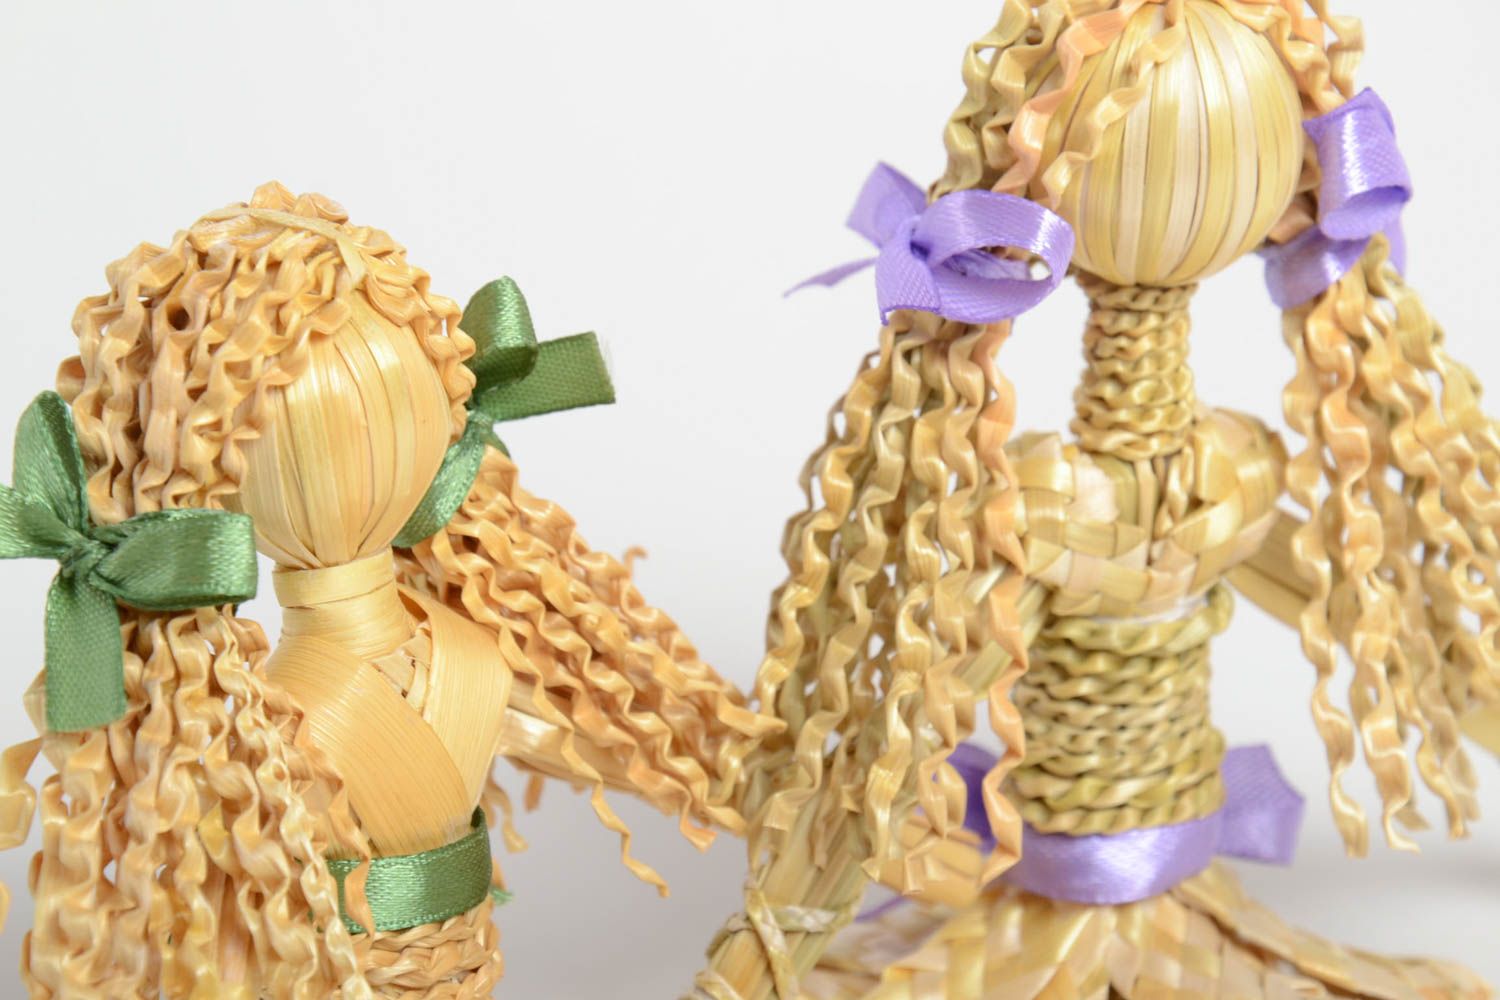 Woven handmade dolls unusual interior decor stylish toys made of straw 2 pieces photo 5